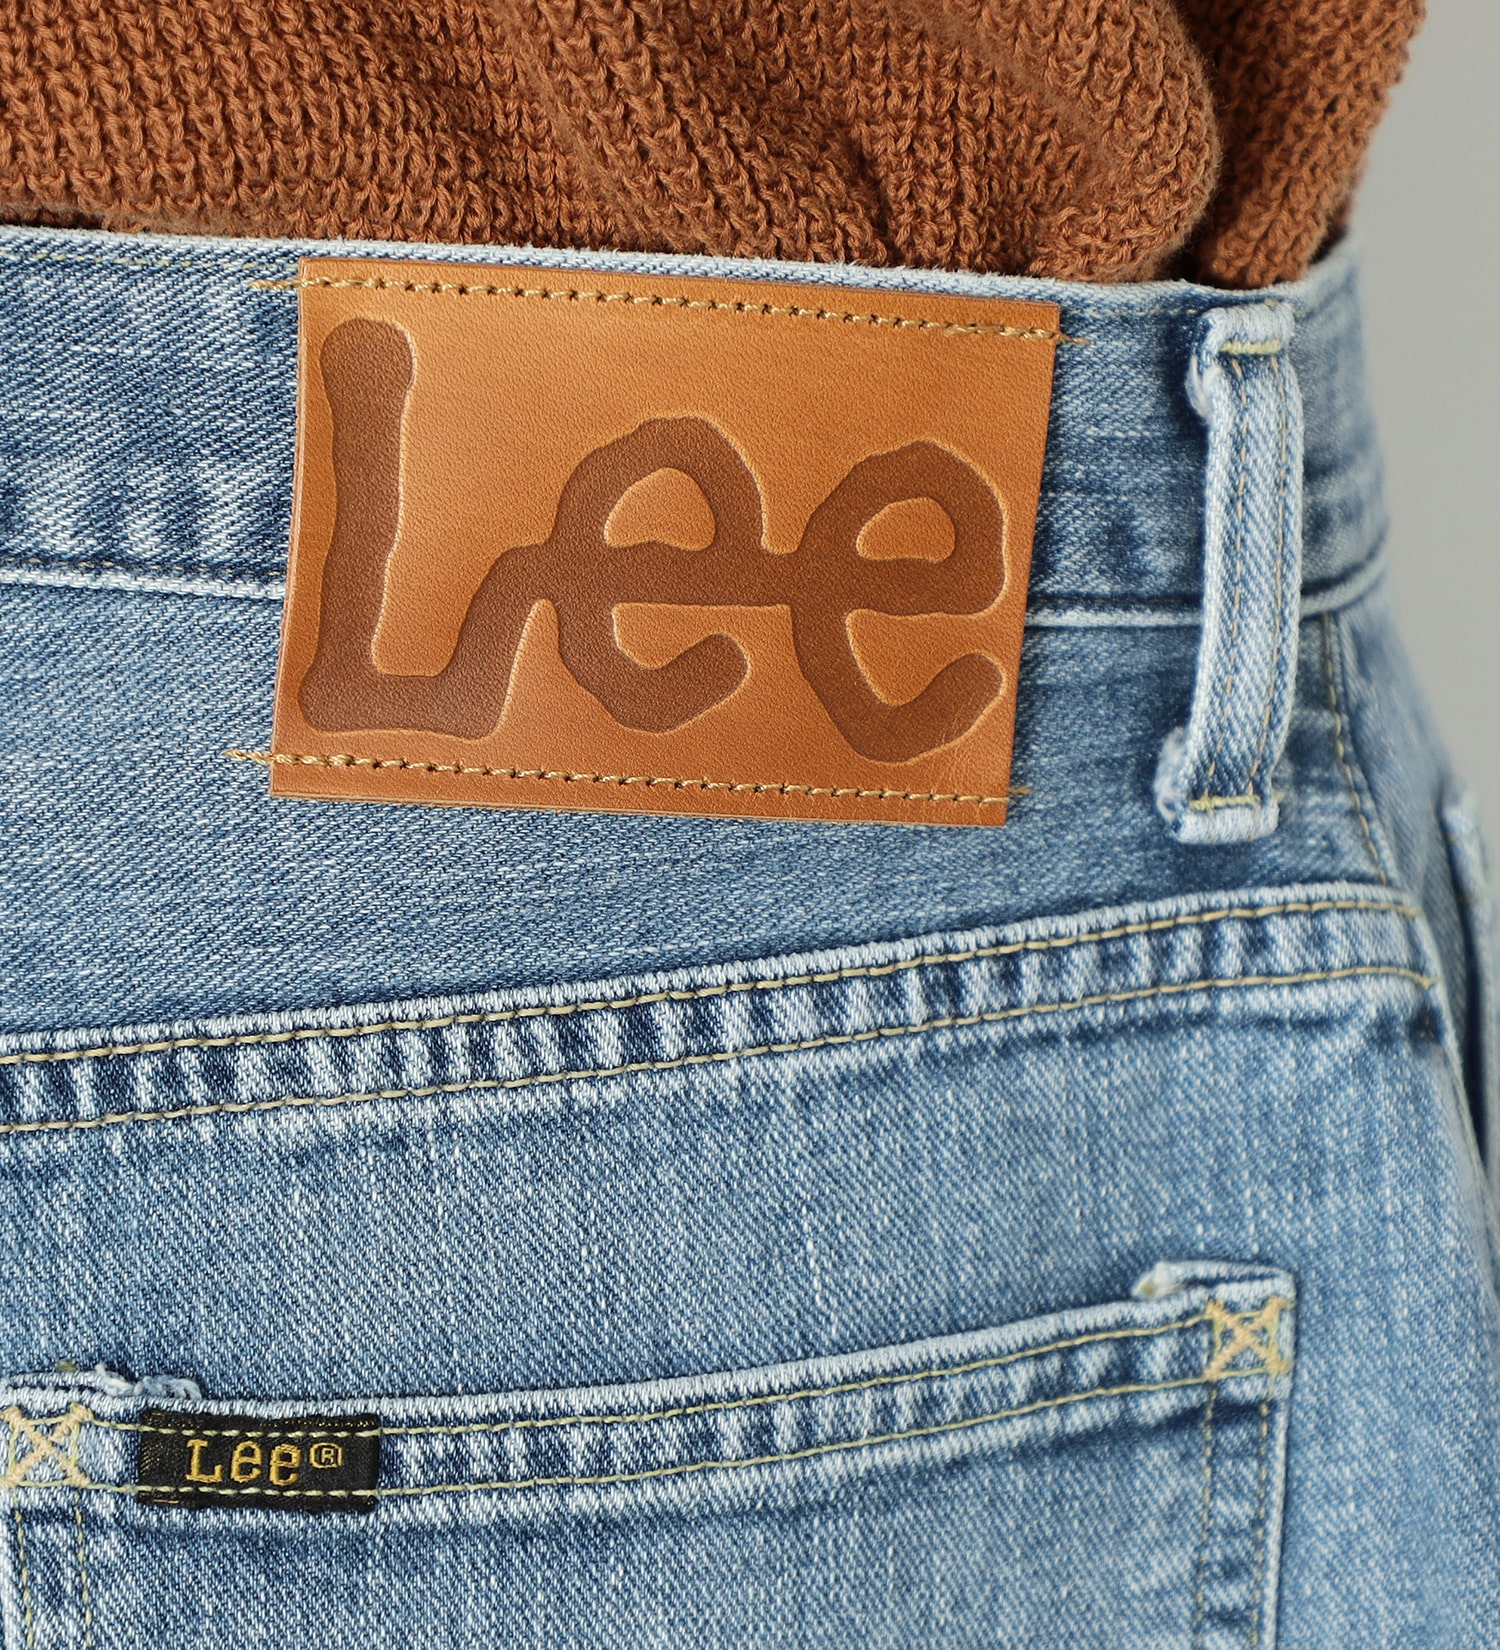 Lee(リー)の【おまとめ割対象】【試着対象】SUPERSIZED ストレートデニムパンツ|パンツ/デニムパンツ/メンズ|中色ブルー